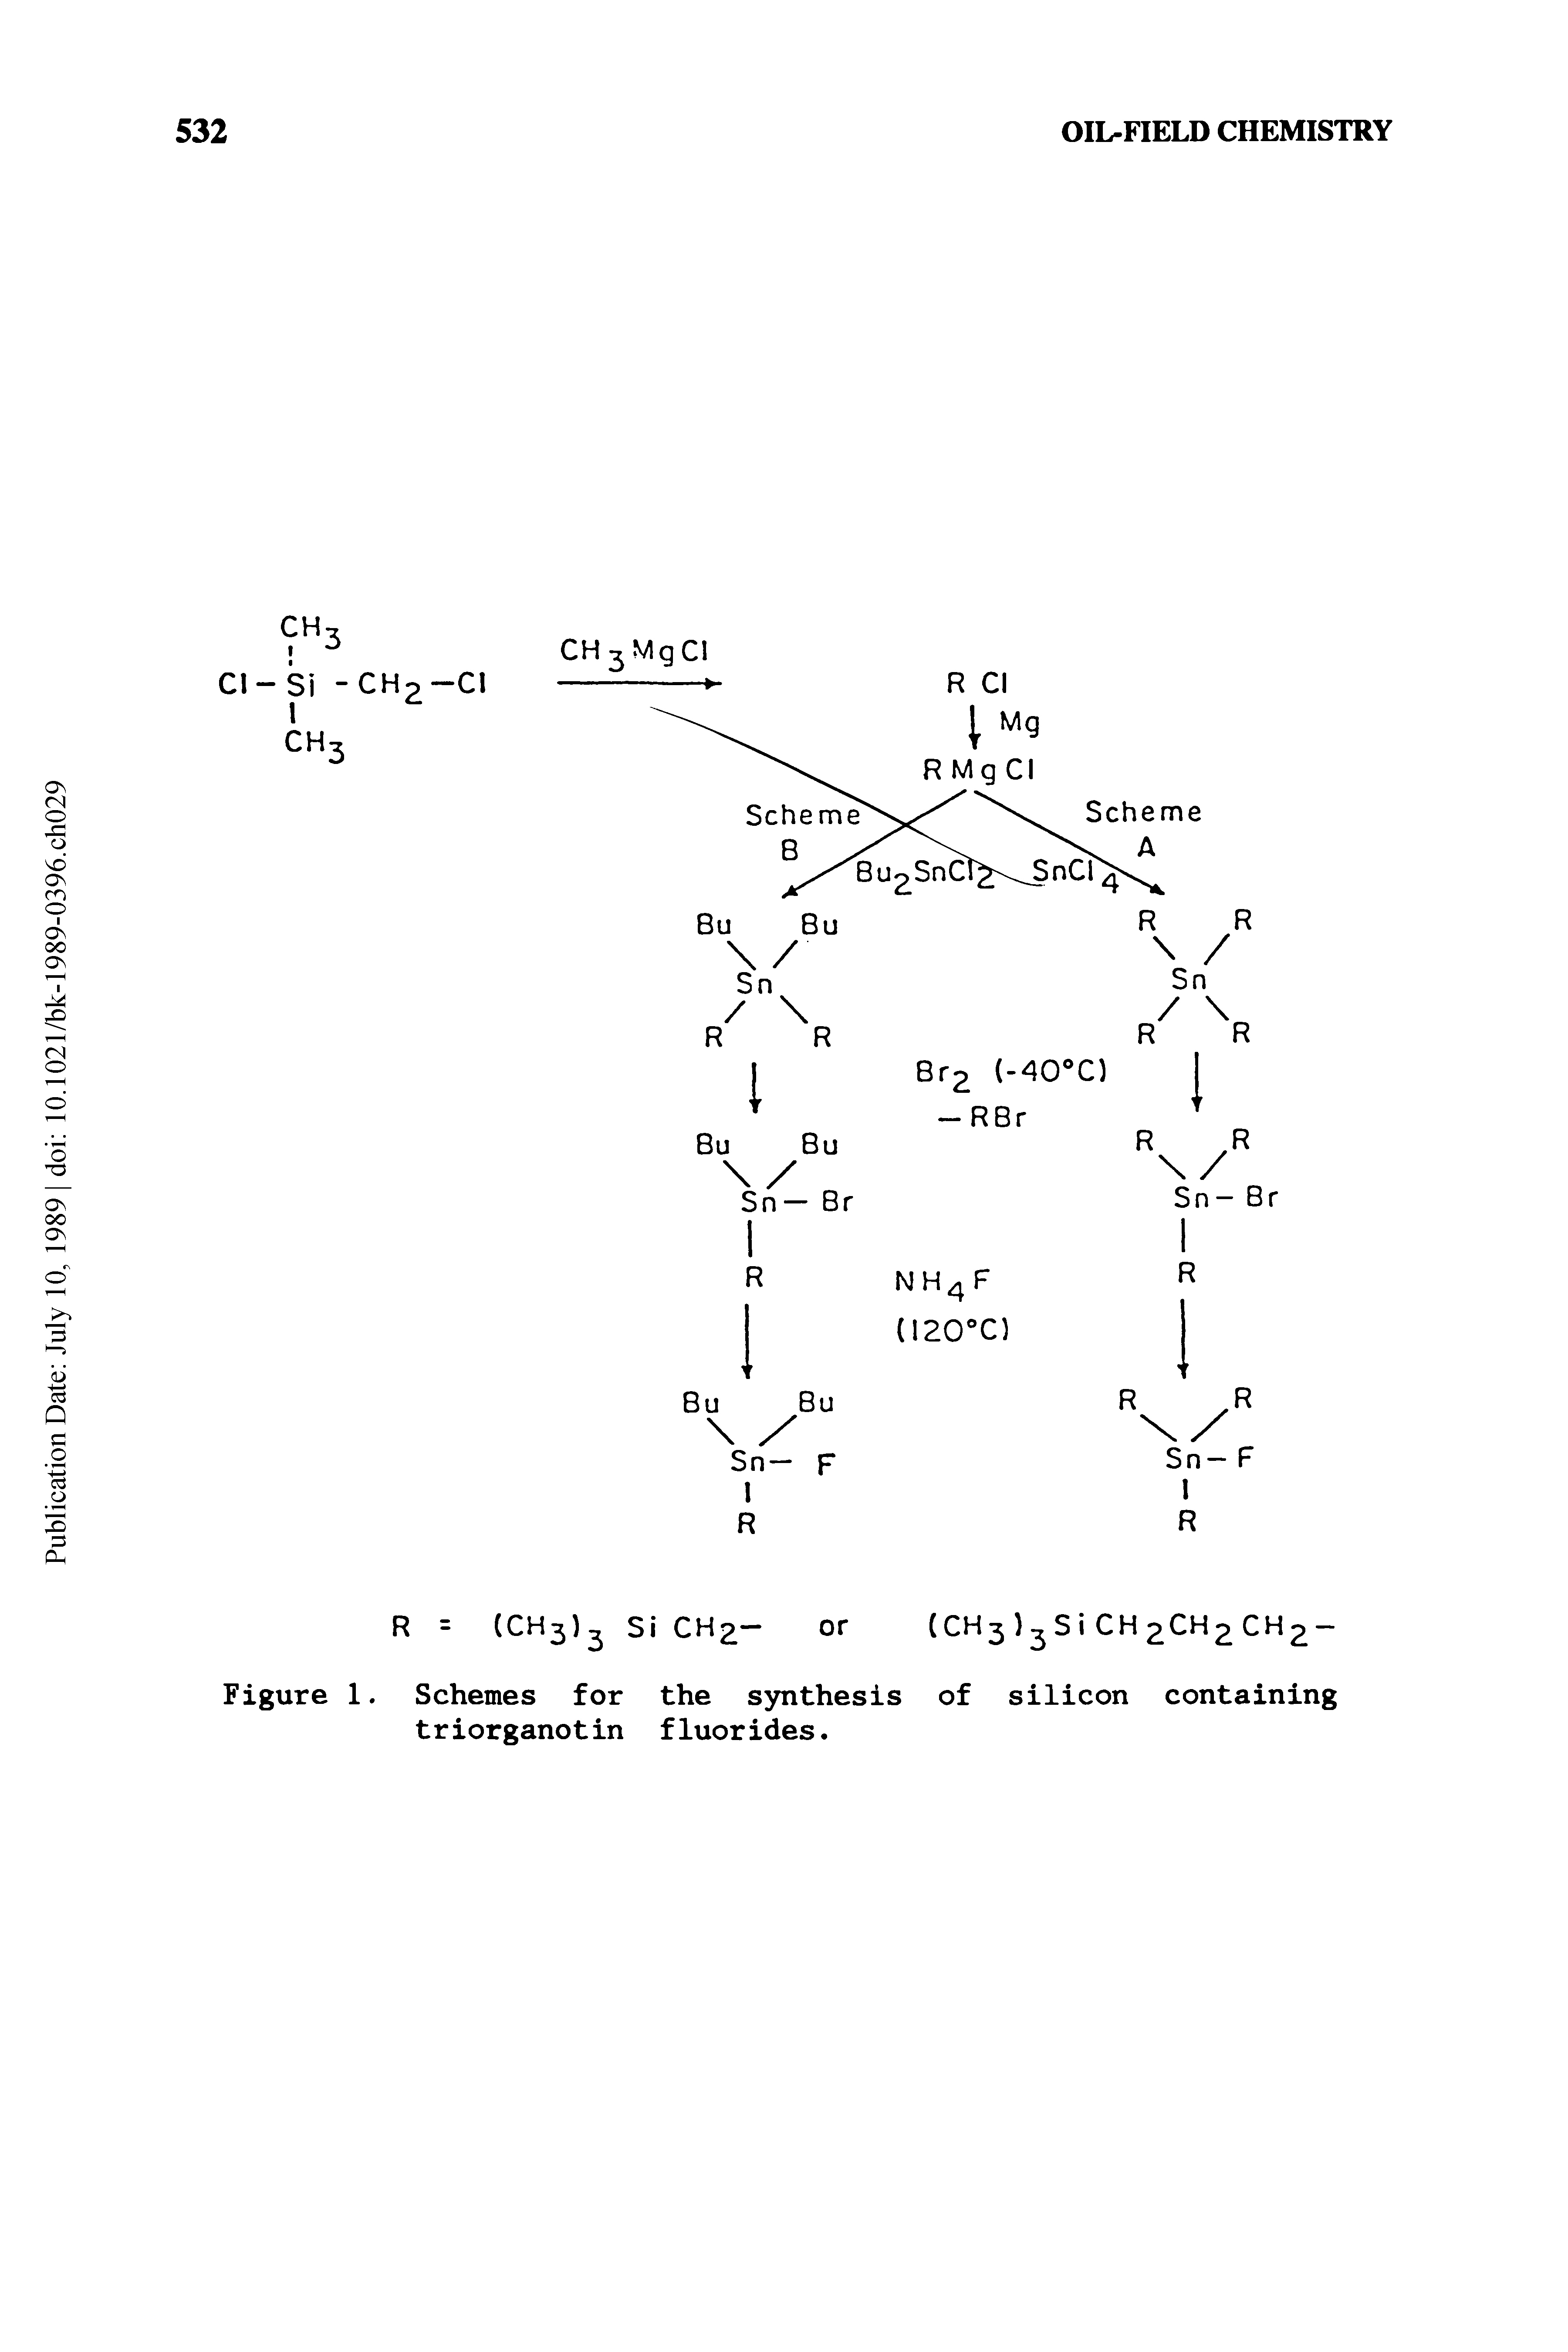 Figure 1. Schemes for the synthesis of silicon containing triorganotin fluorides.